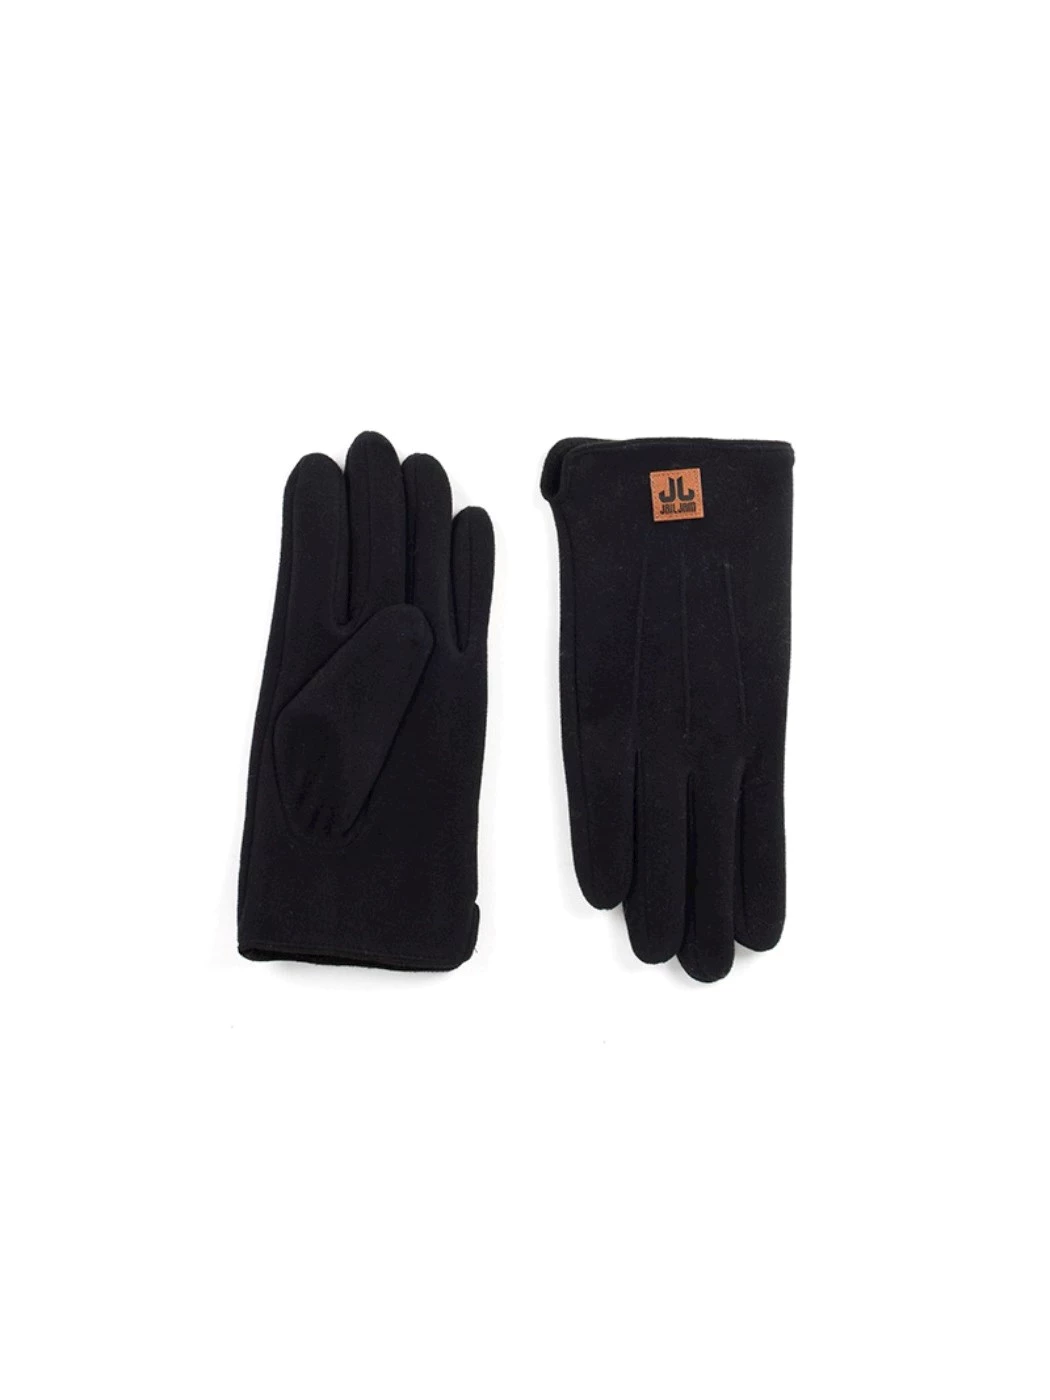 Mirage fabric glove